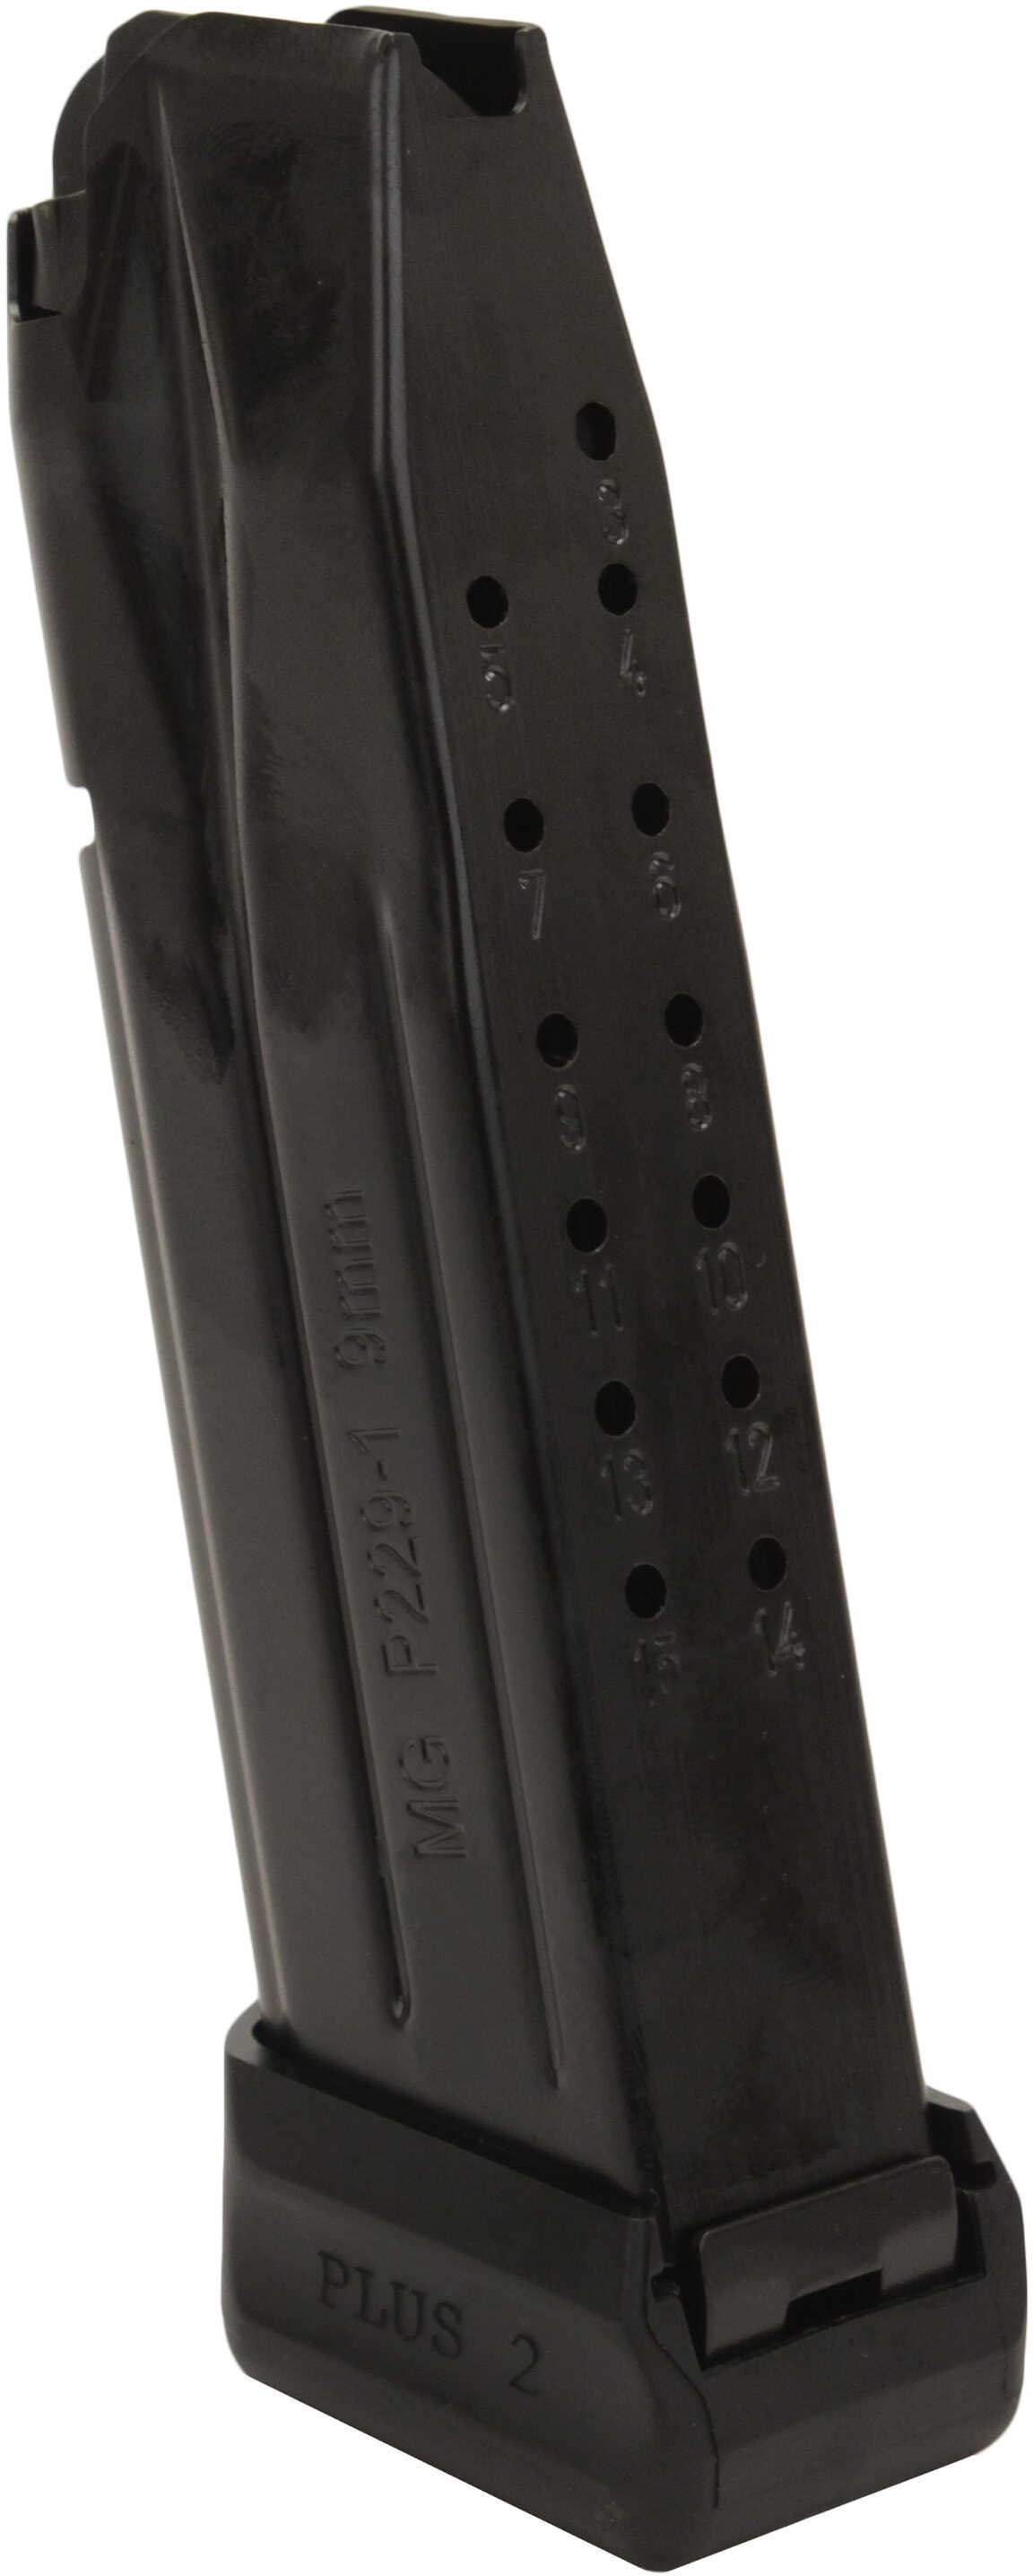 MEC-Gar MGP22917Afc Replacement Magazine Sig P229 9mm Luger 17 Round Steel Black Anti-Friction Coating Finish